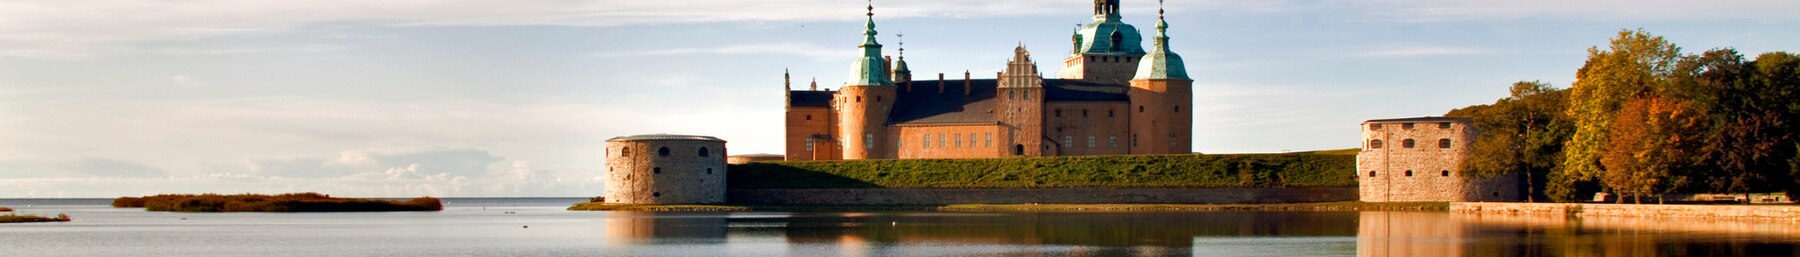 Kalmar banner Kalmar slott nordostra sidan.jpg